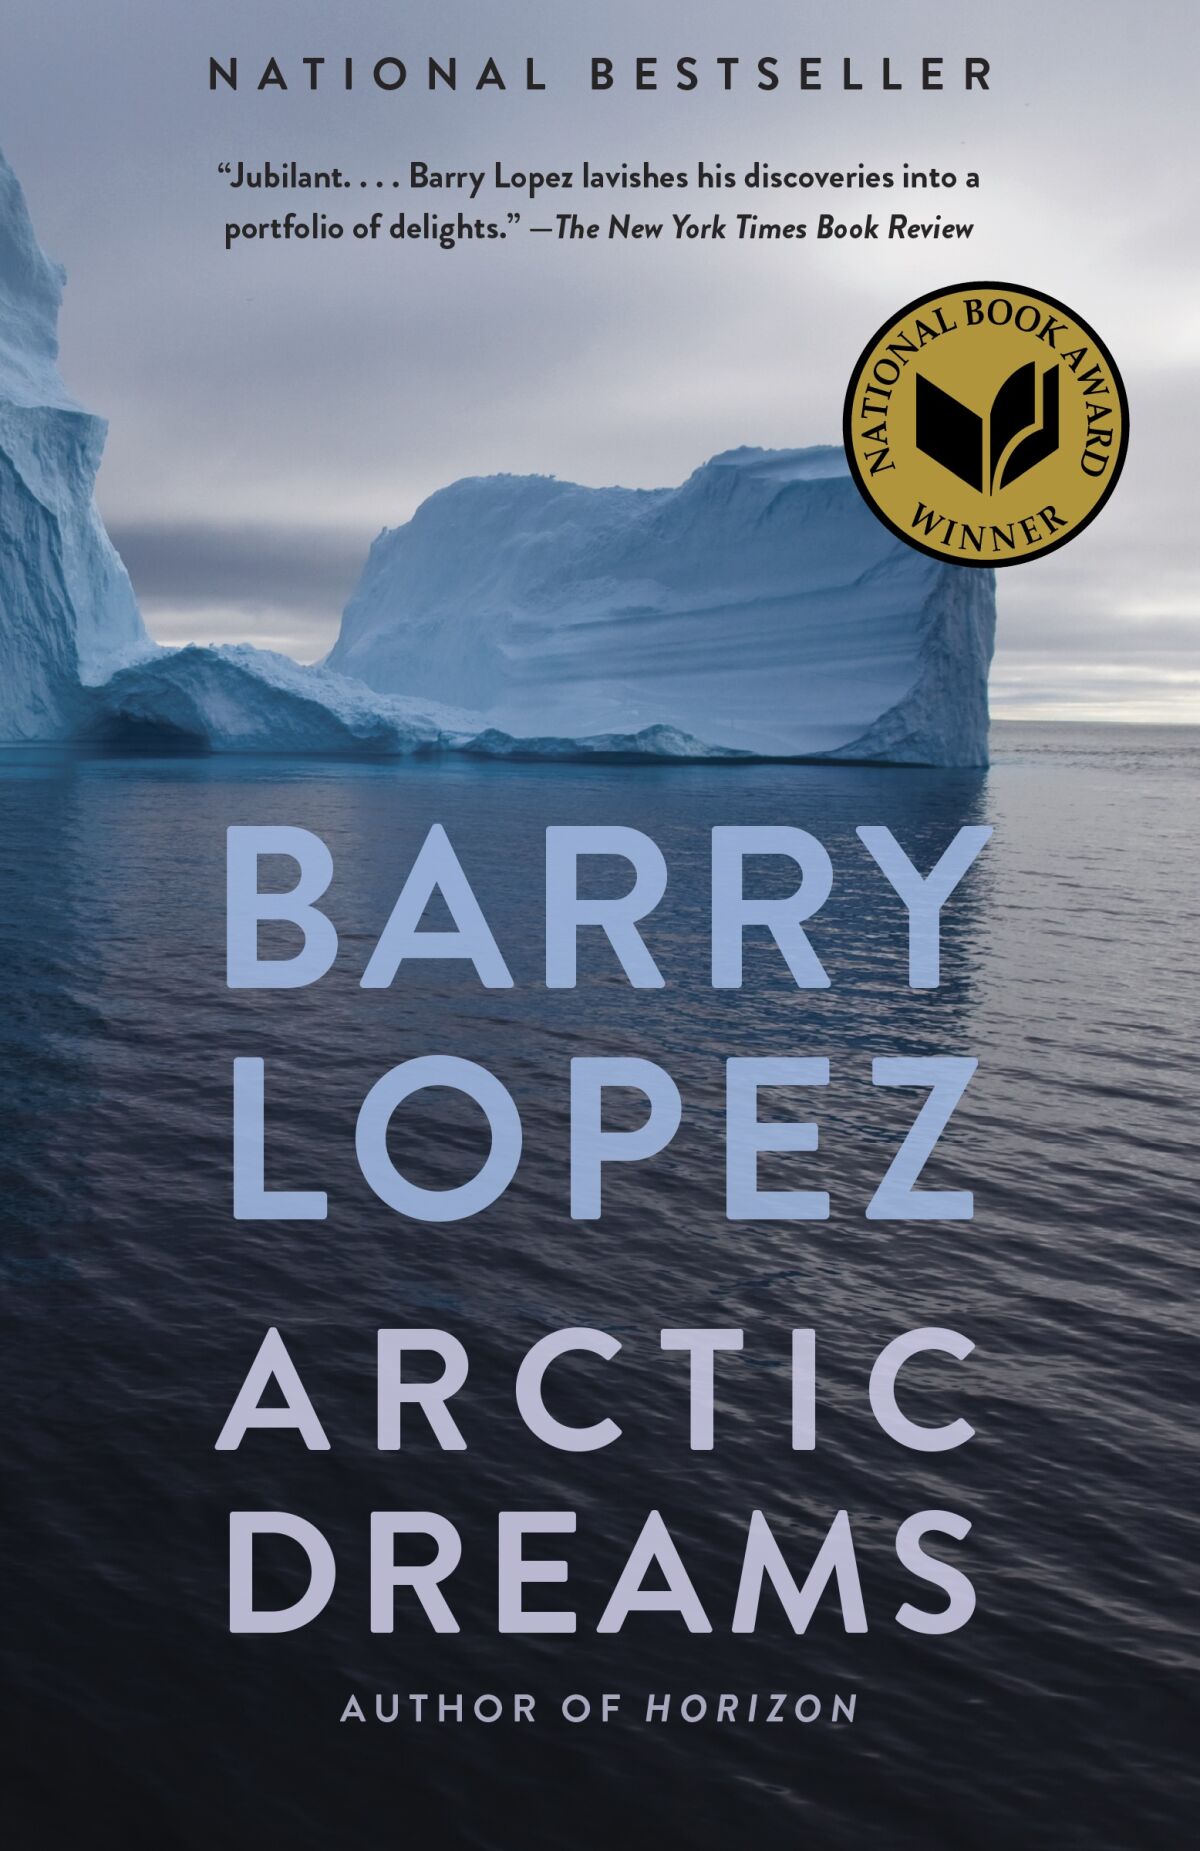 "Arctic Dreams," by Barry Lopez.